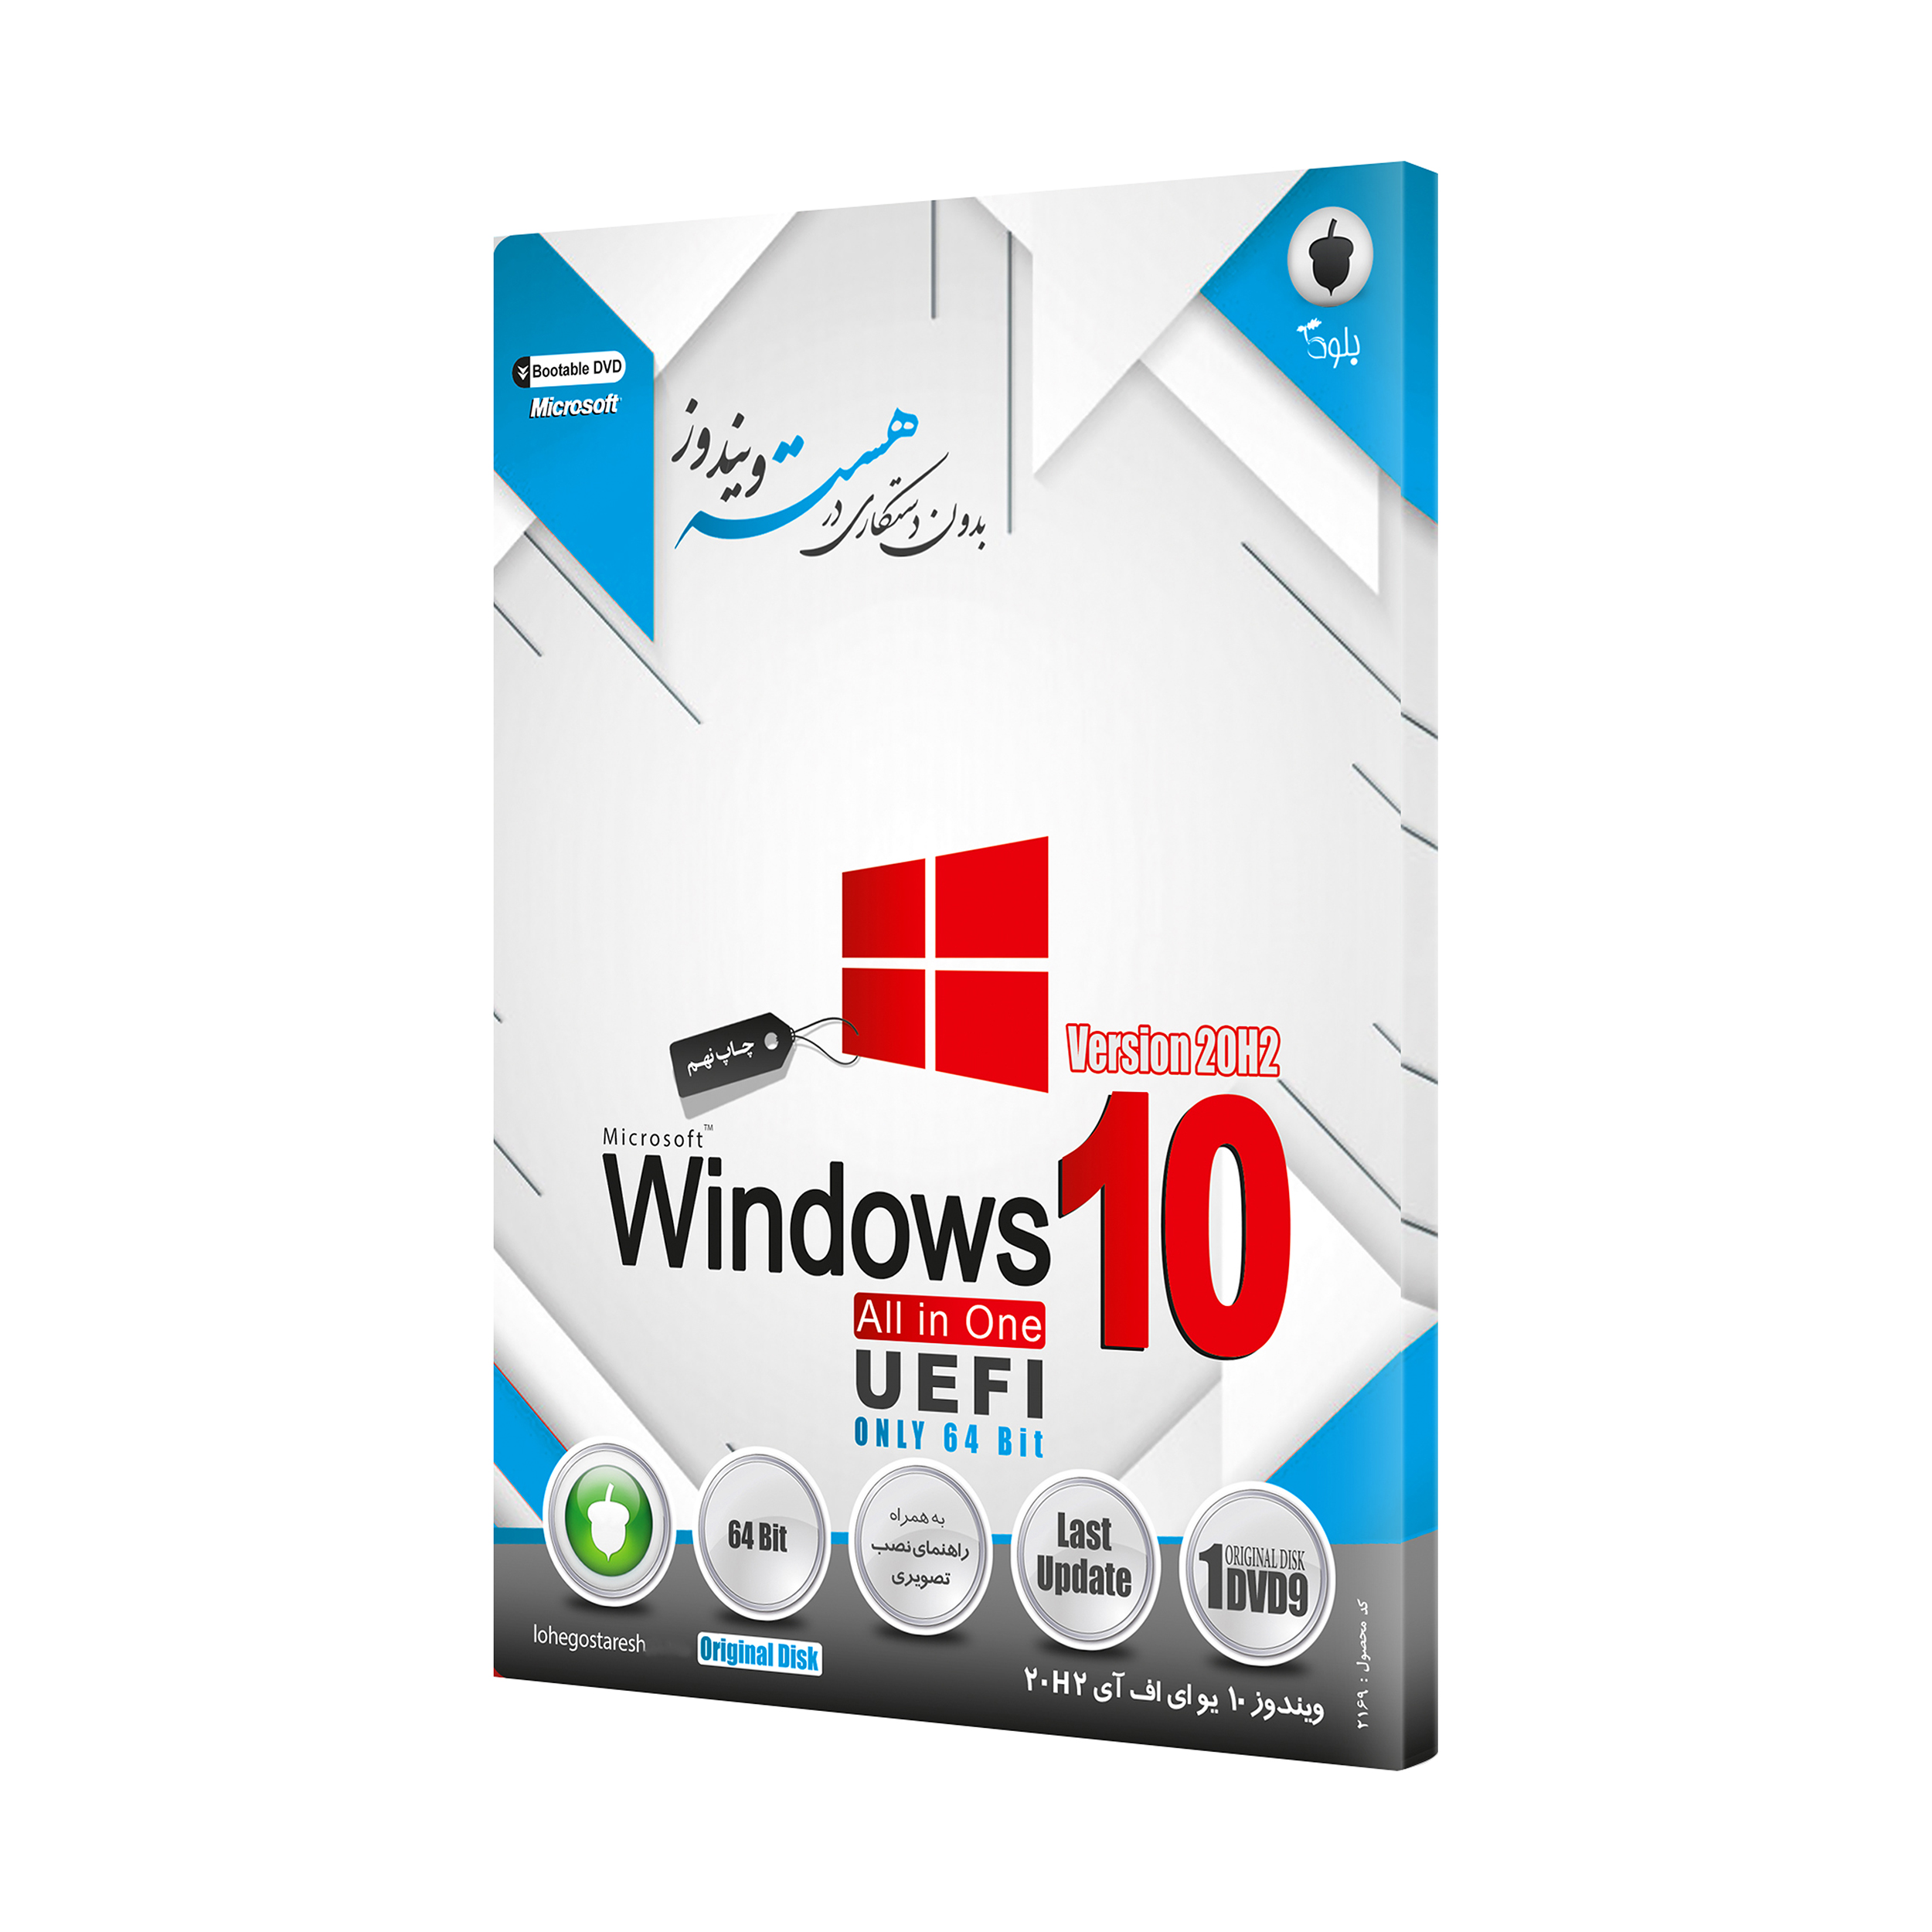 آنباکس سیستم عامل Windows 10 UEFI 20H2 نشر بلوط توسط مریم علیپور در تاریخ ۱۶ اسفند ۱۳۹۹